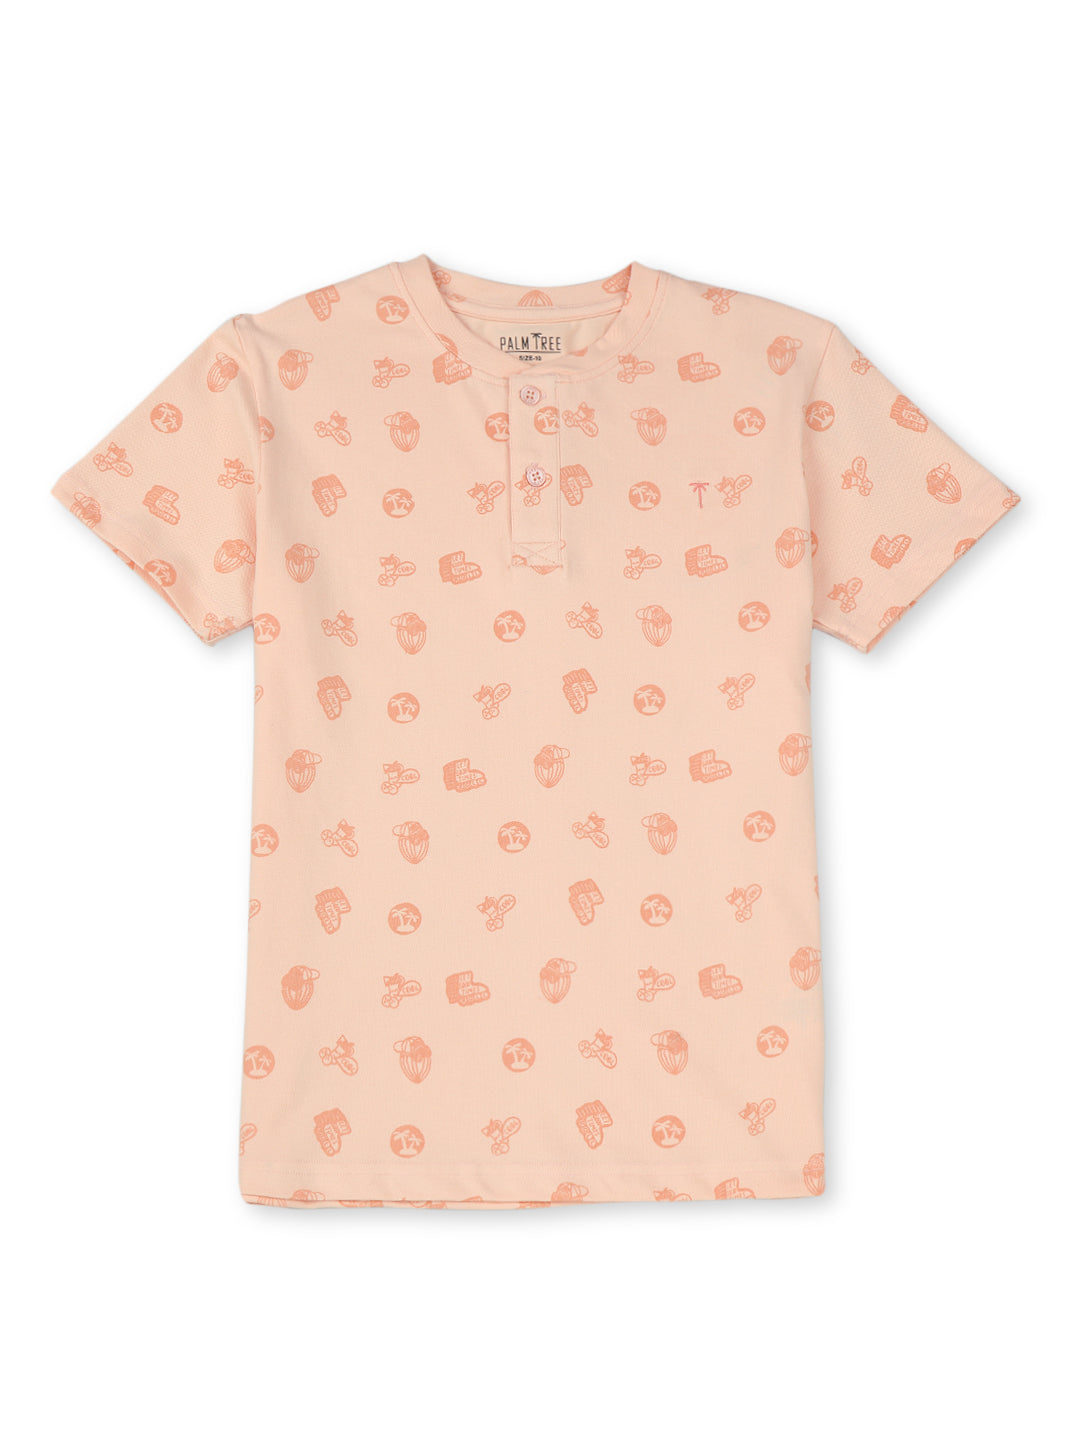 Boys Pink Cotton Printed T-Shirt